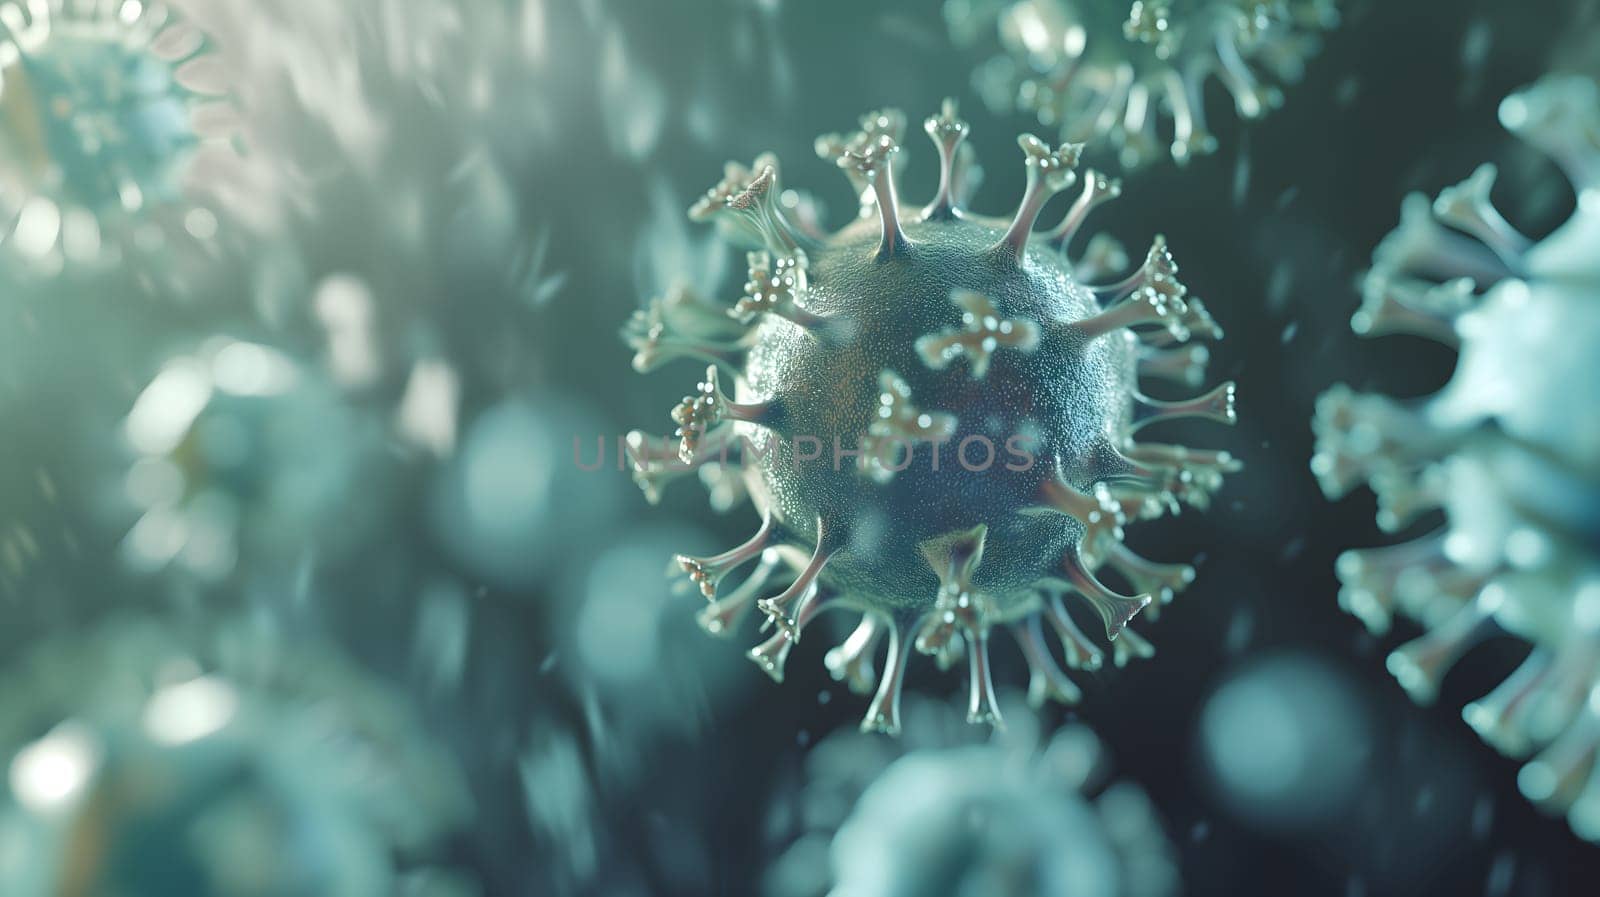 many coronaviruses micro scene background by z1b